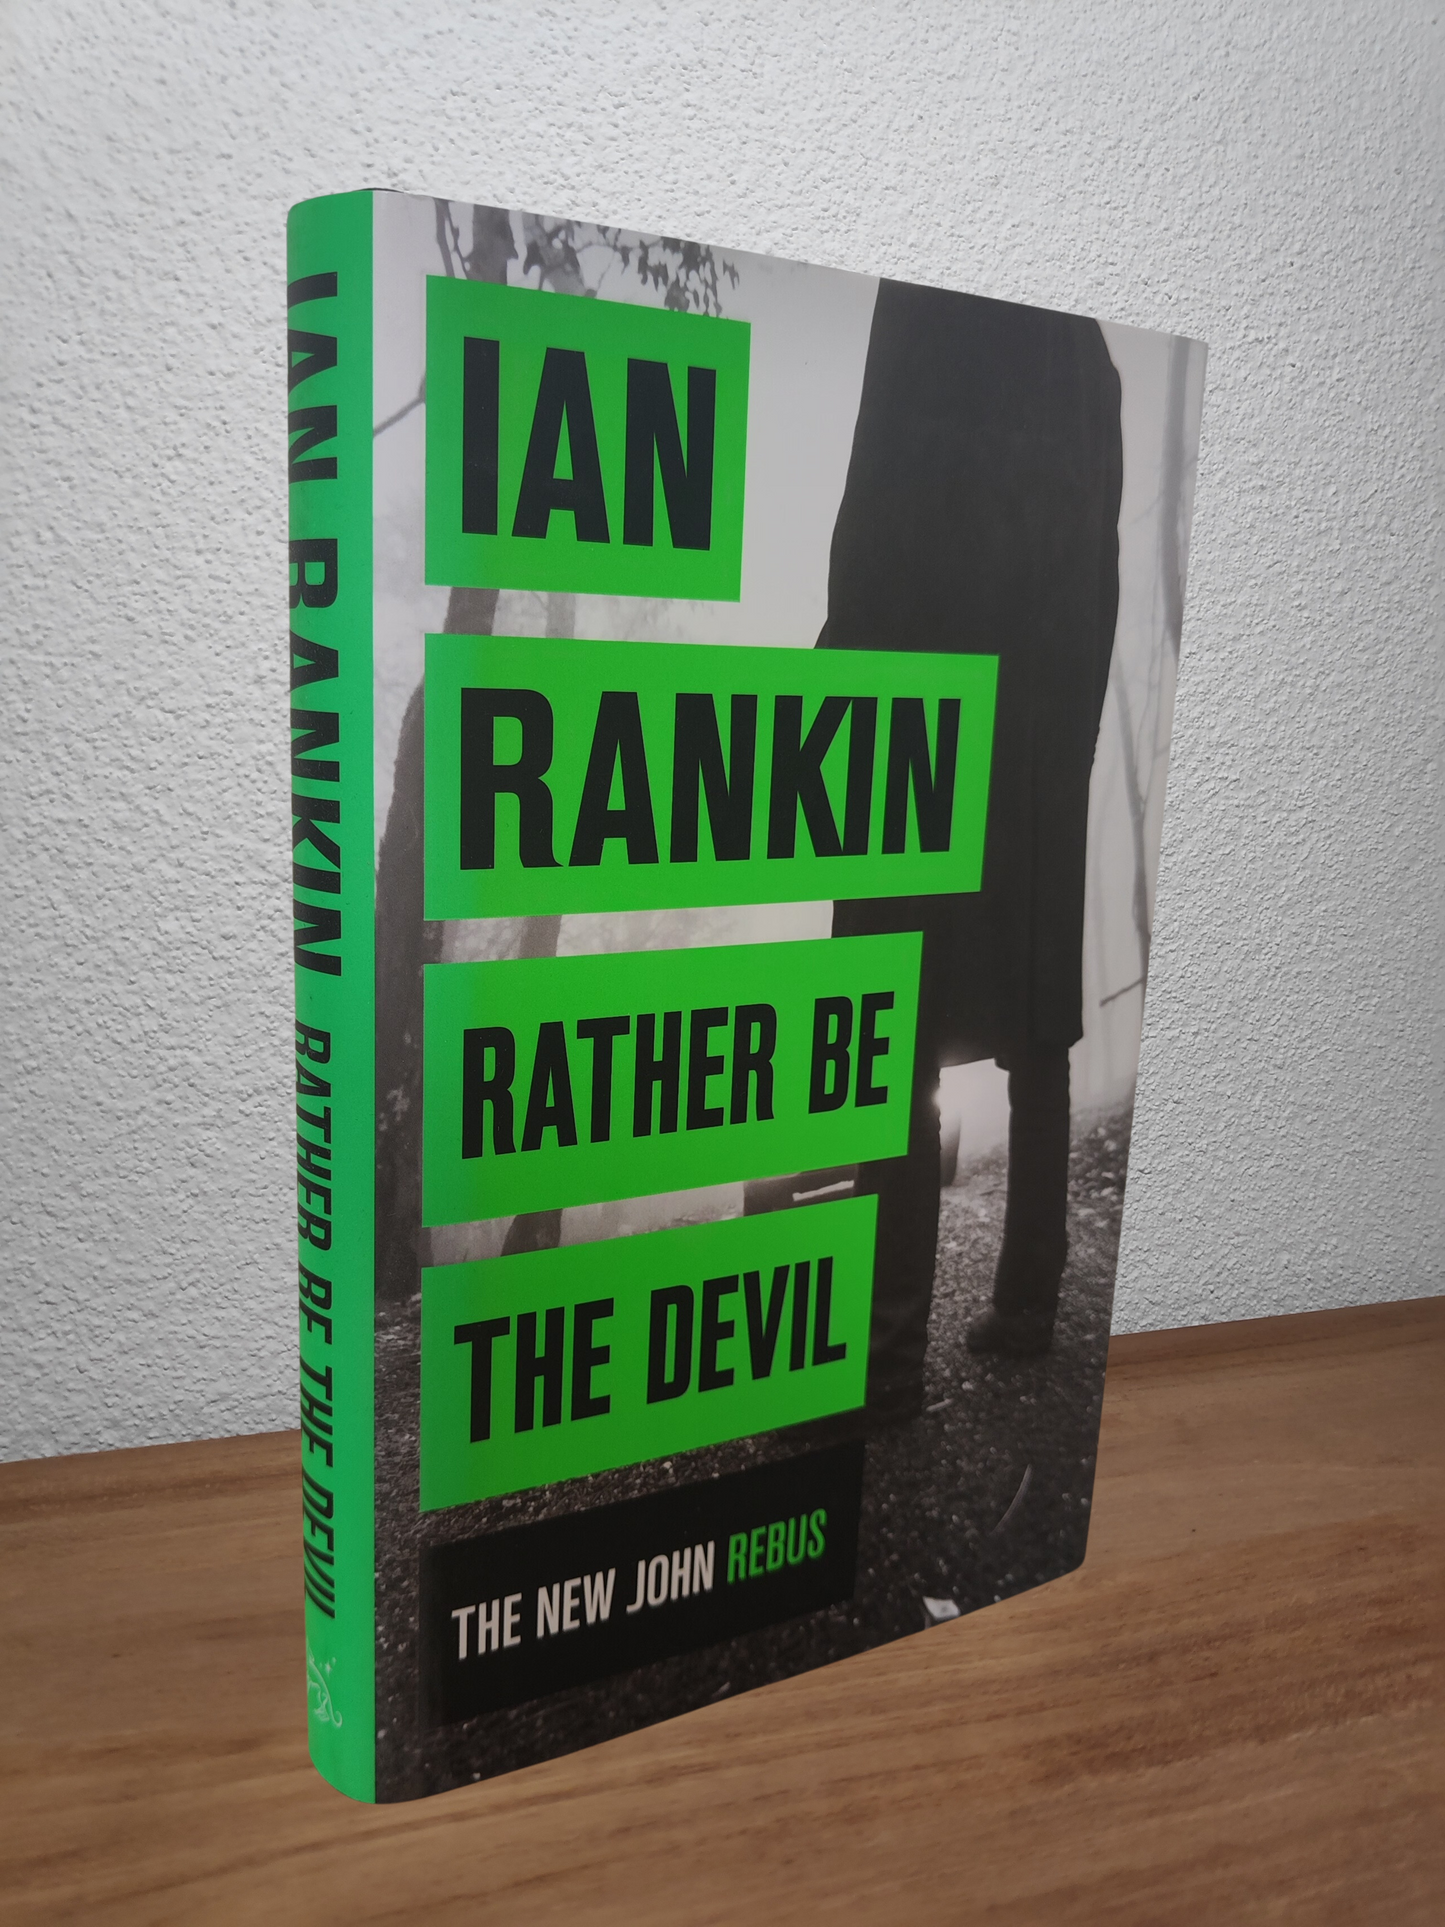 Ian Rankin - Rather Be the Devil (Inspector Rebus #21)